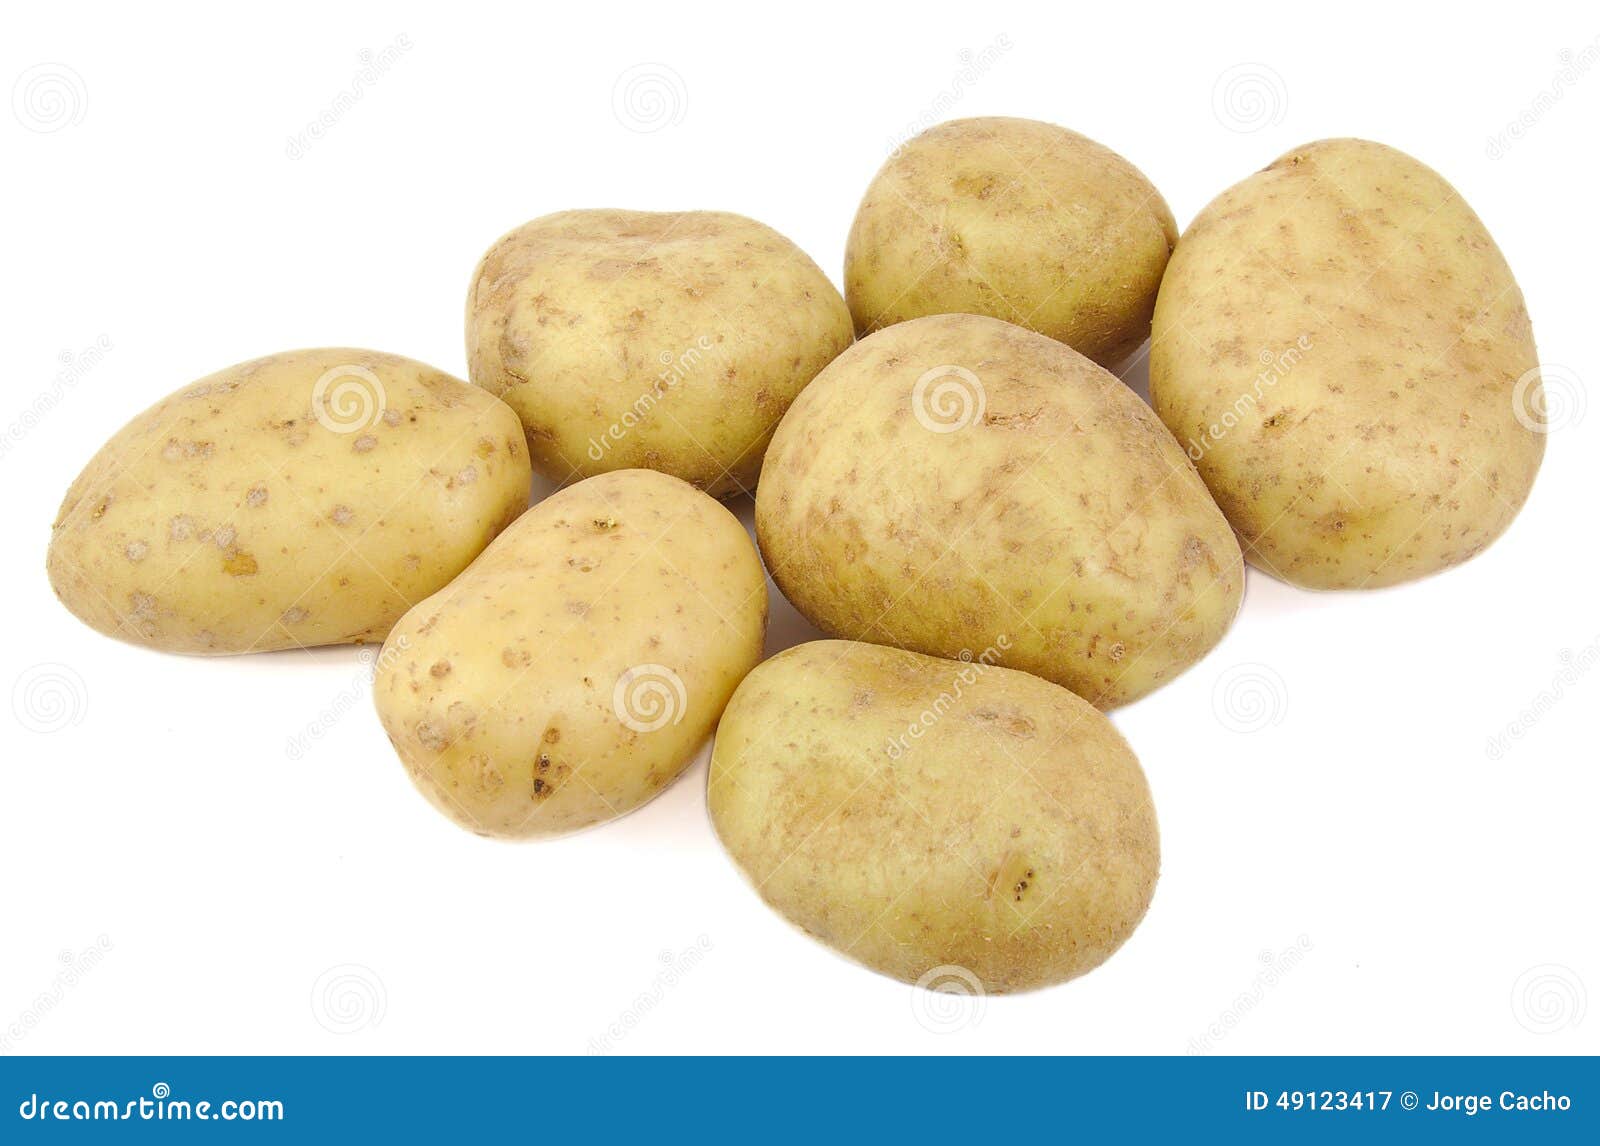 2,027 Isolated Potatoe Stock Photos - Free & Royalty-Free Stock Photos from  Dreamstime